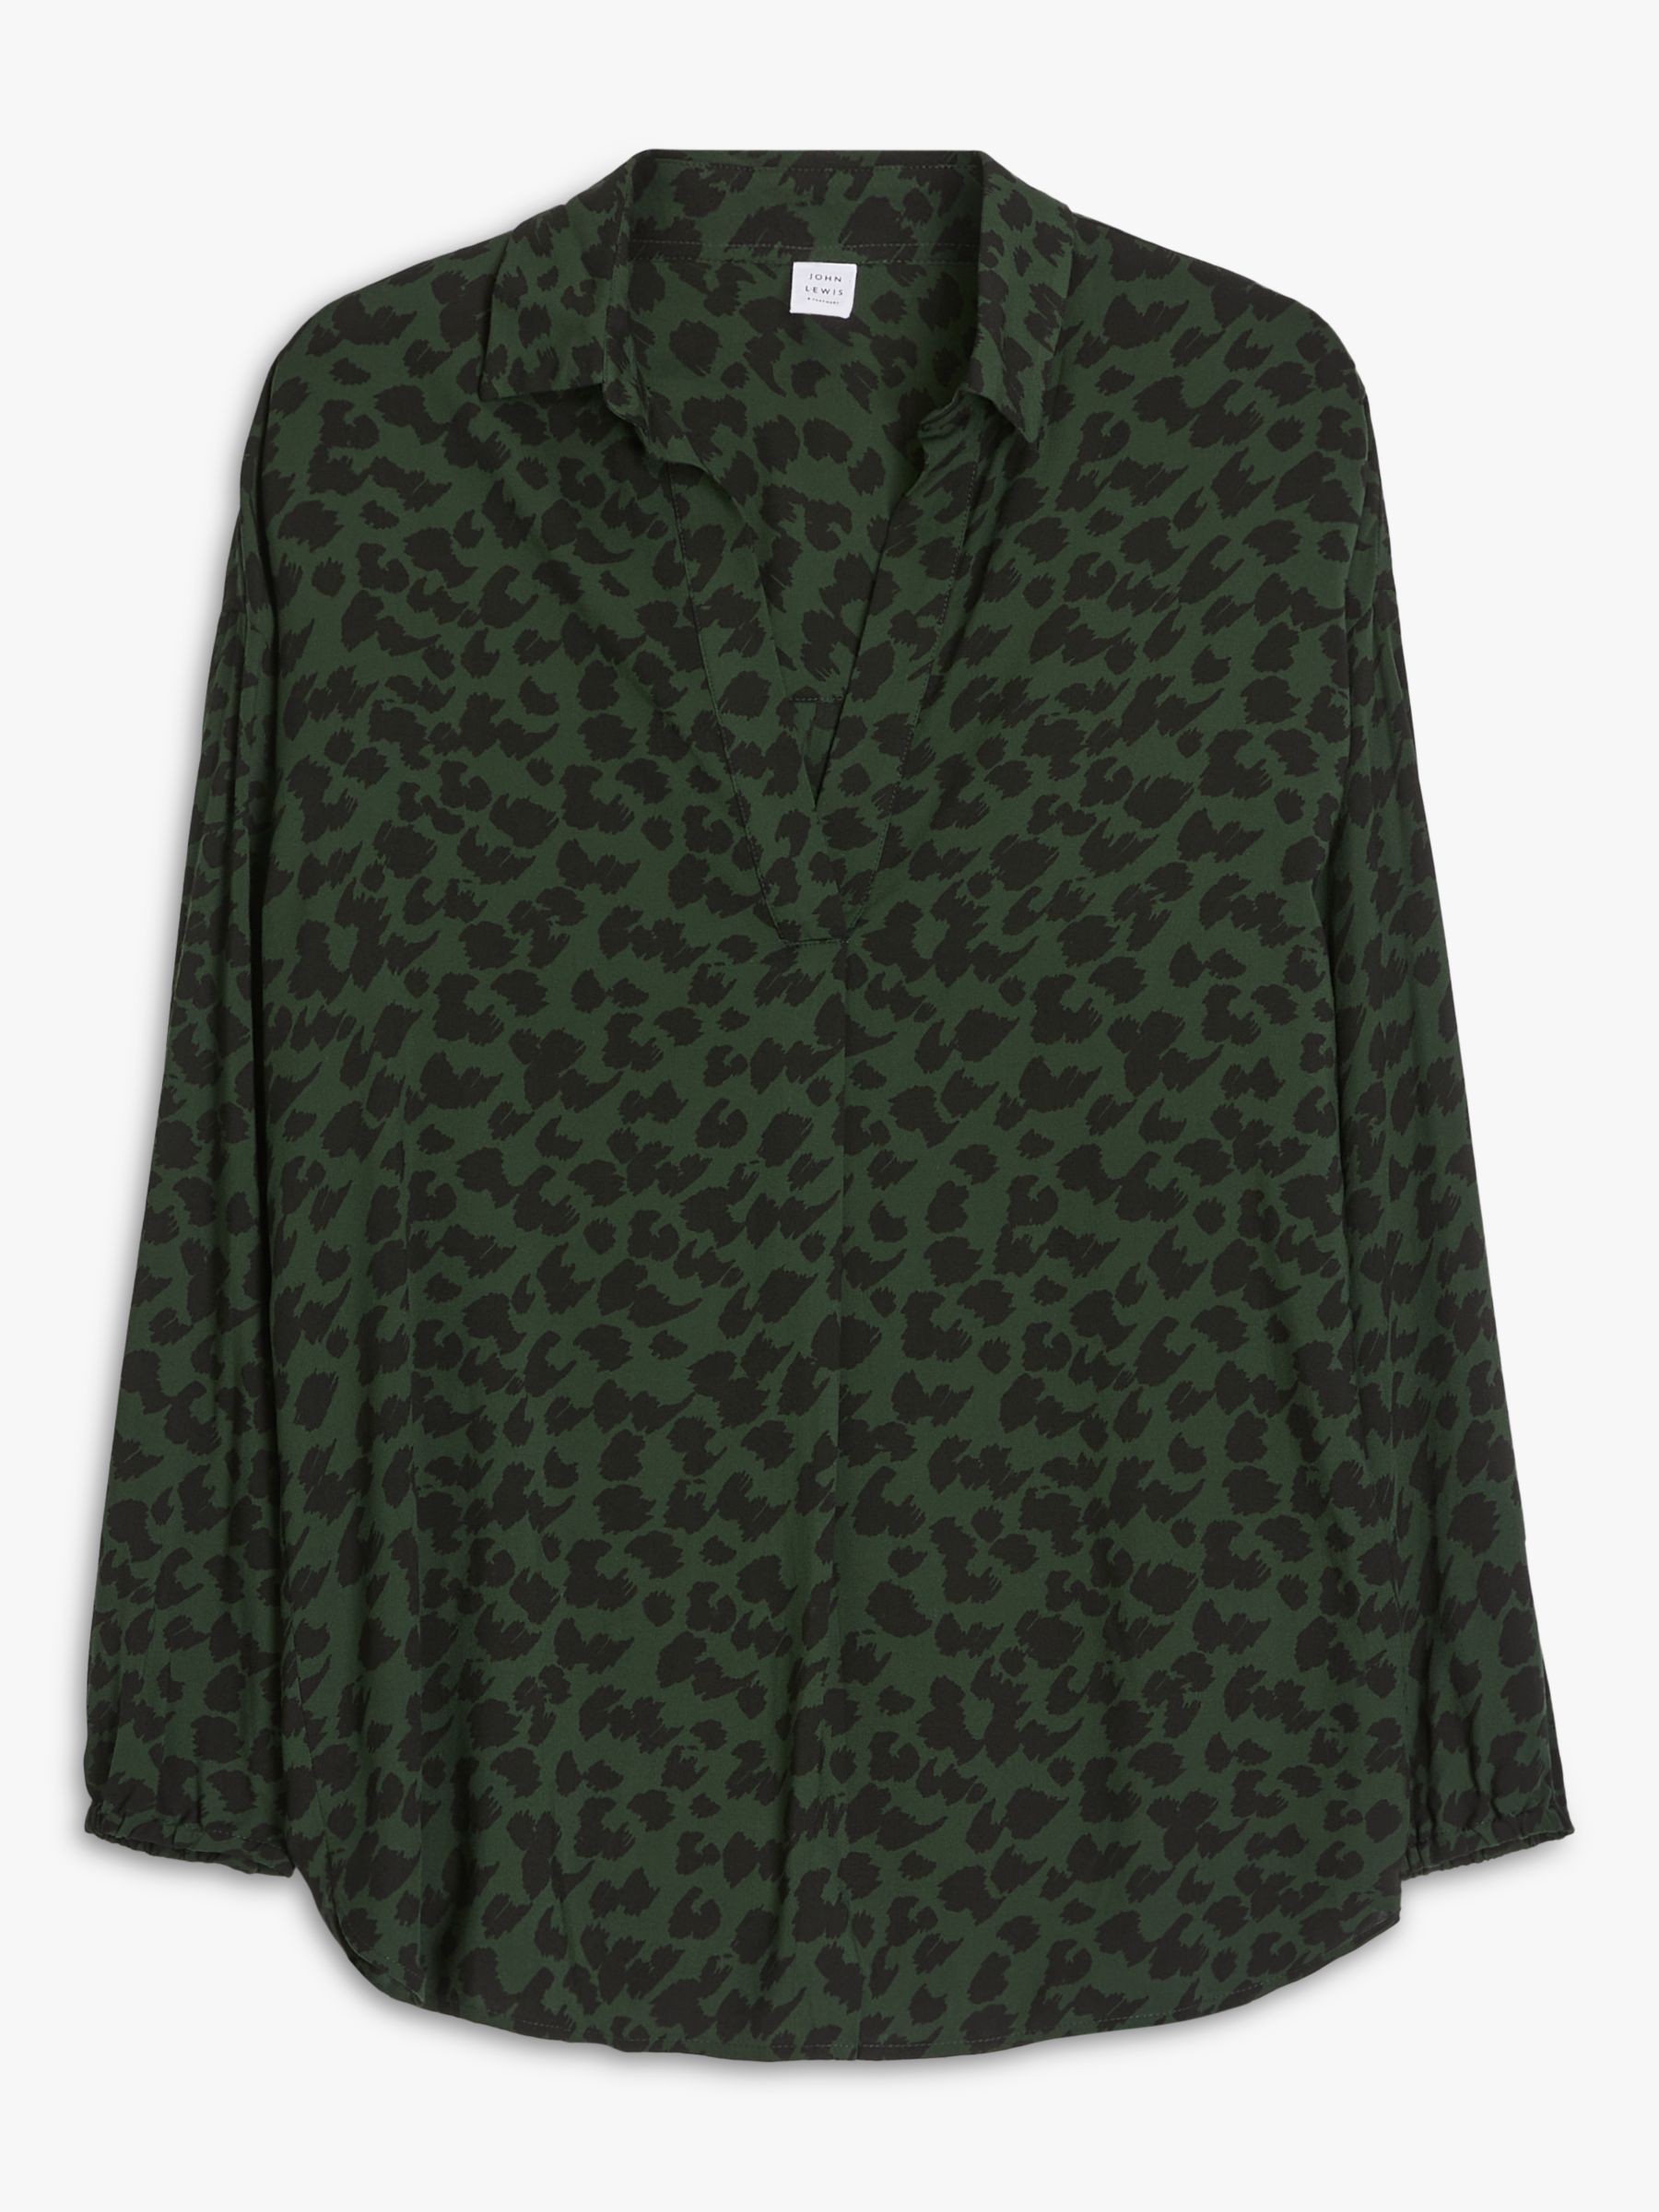 John Lewis & Partners Animal Print Tunic, Green/Black